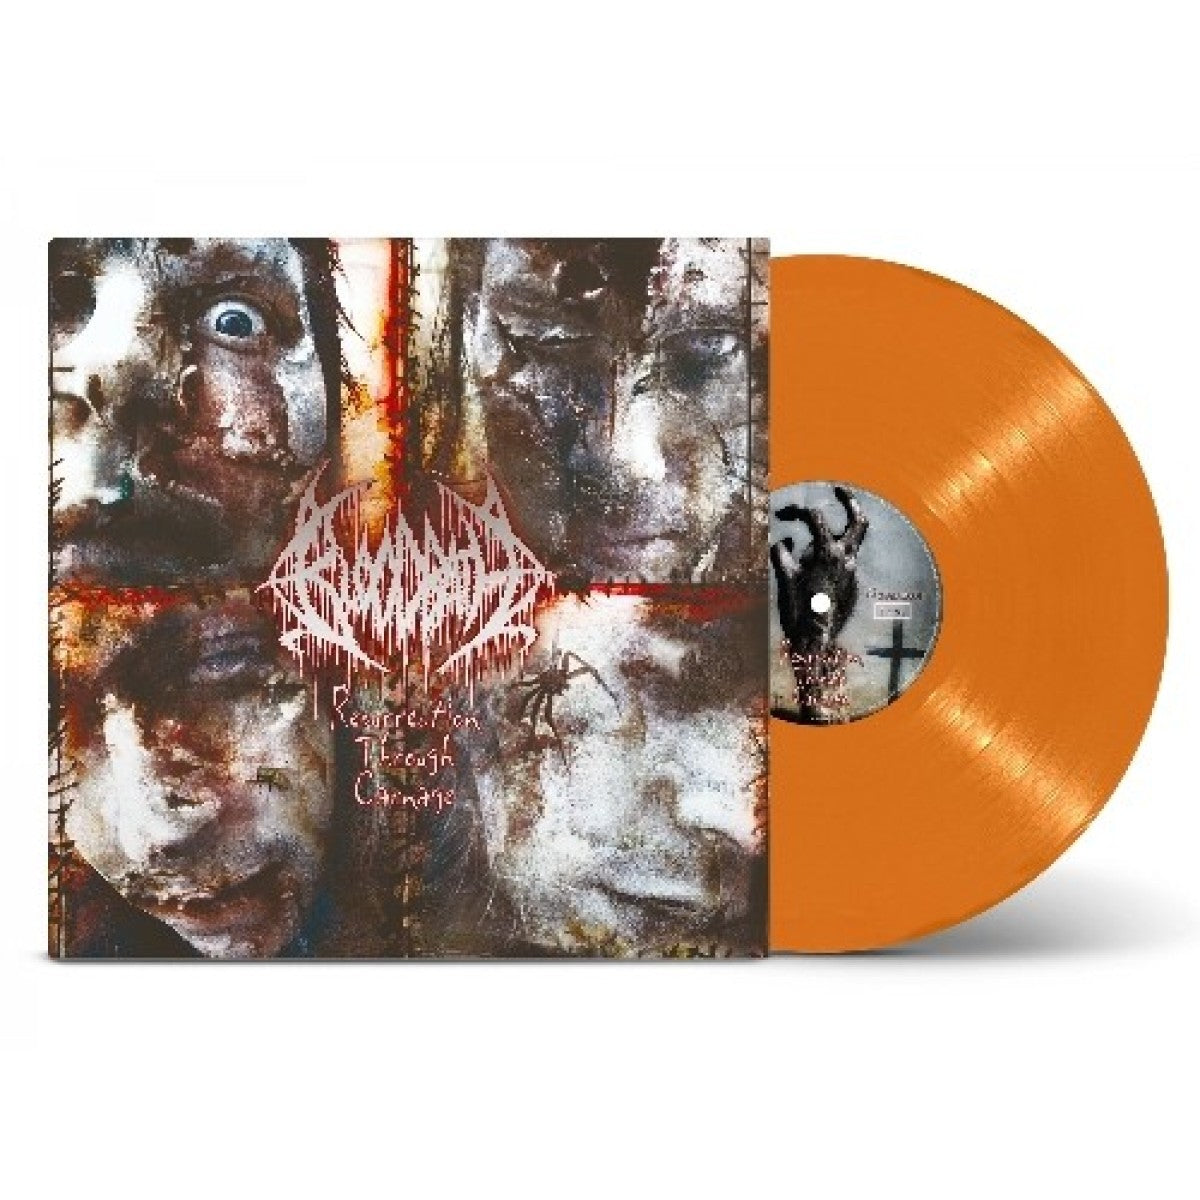 Bloodbath "Resurrection Through Carnage" Orange Vinyl